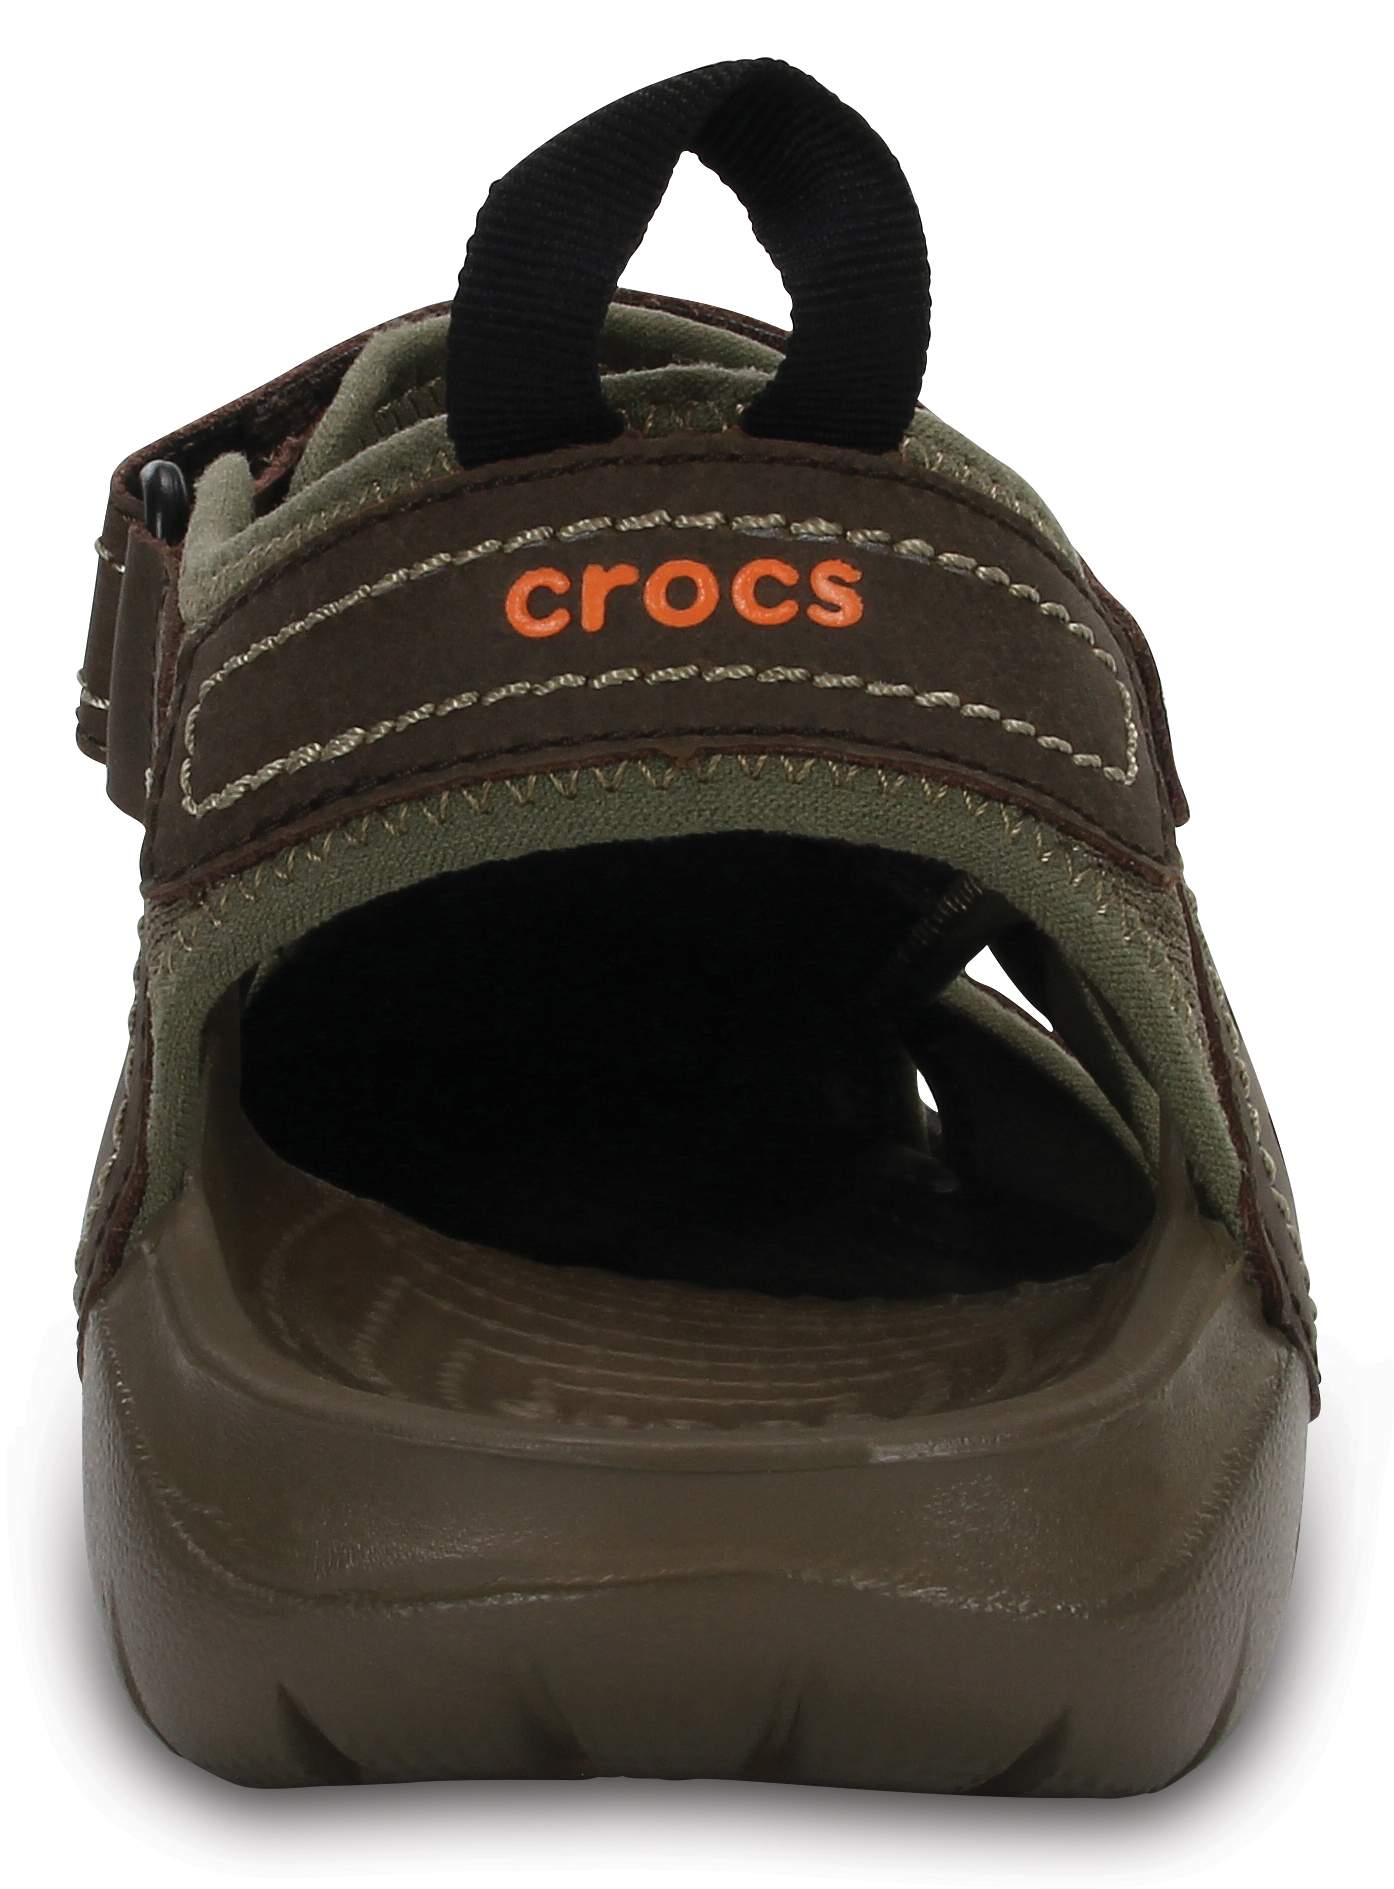 crocs fisherman sandal